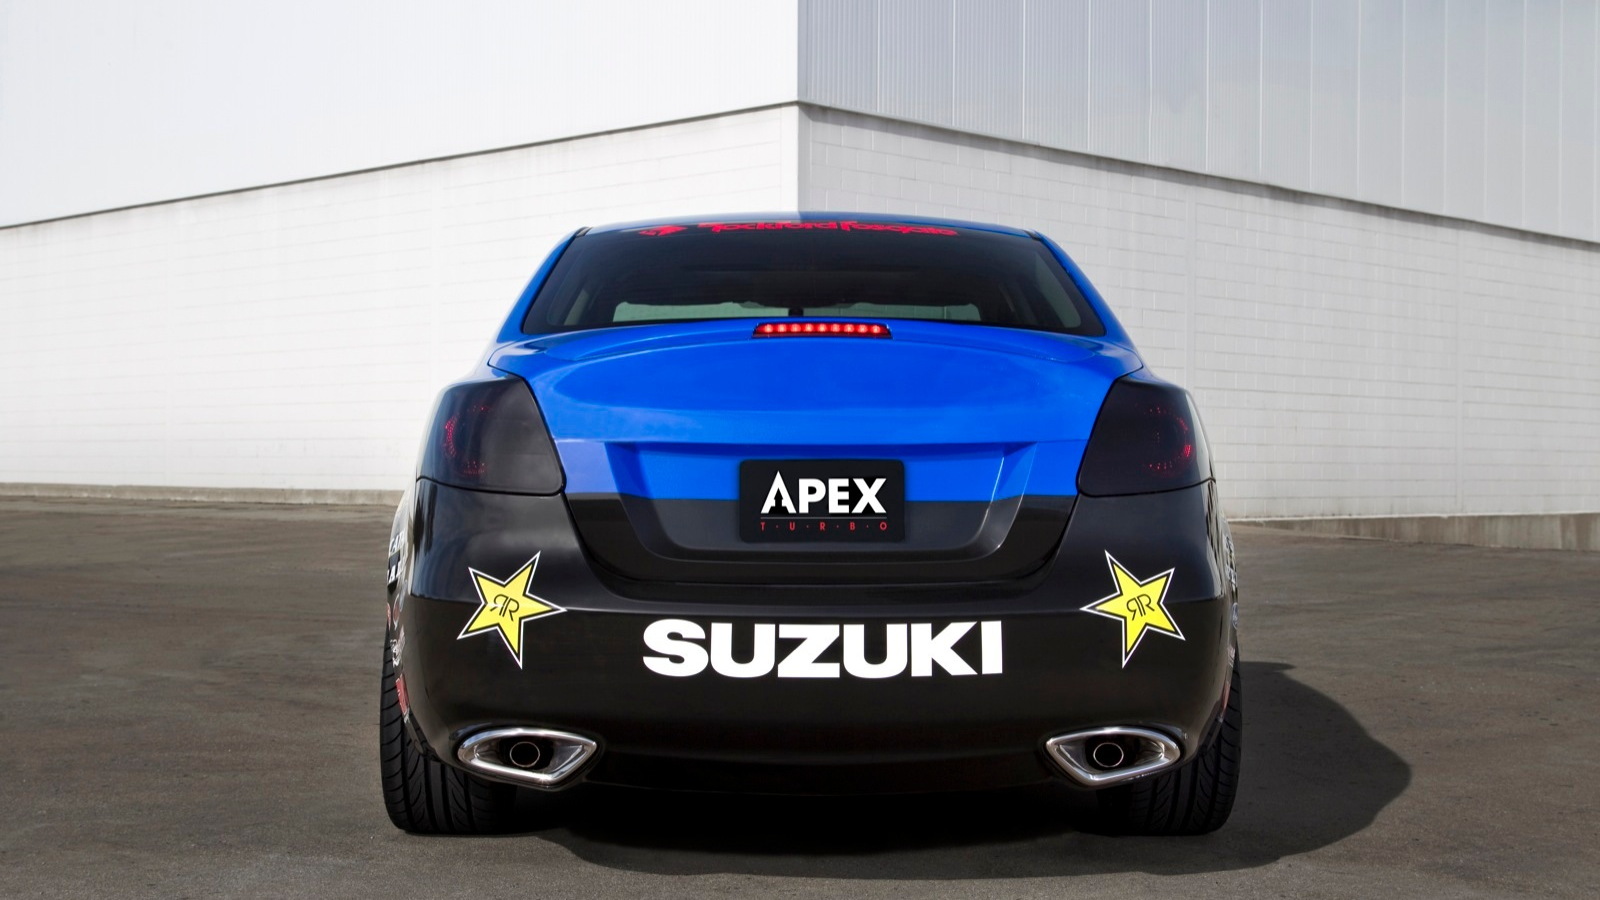 Suzuki Kizashi Apex Concept